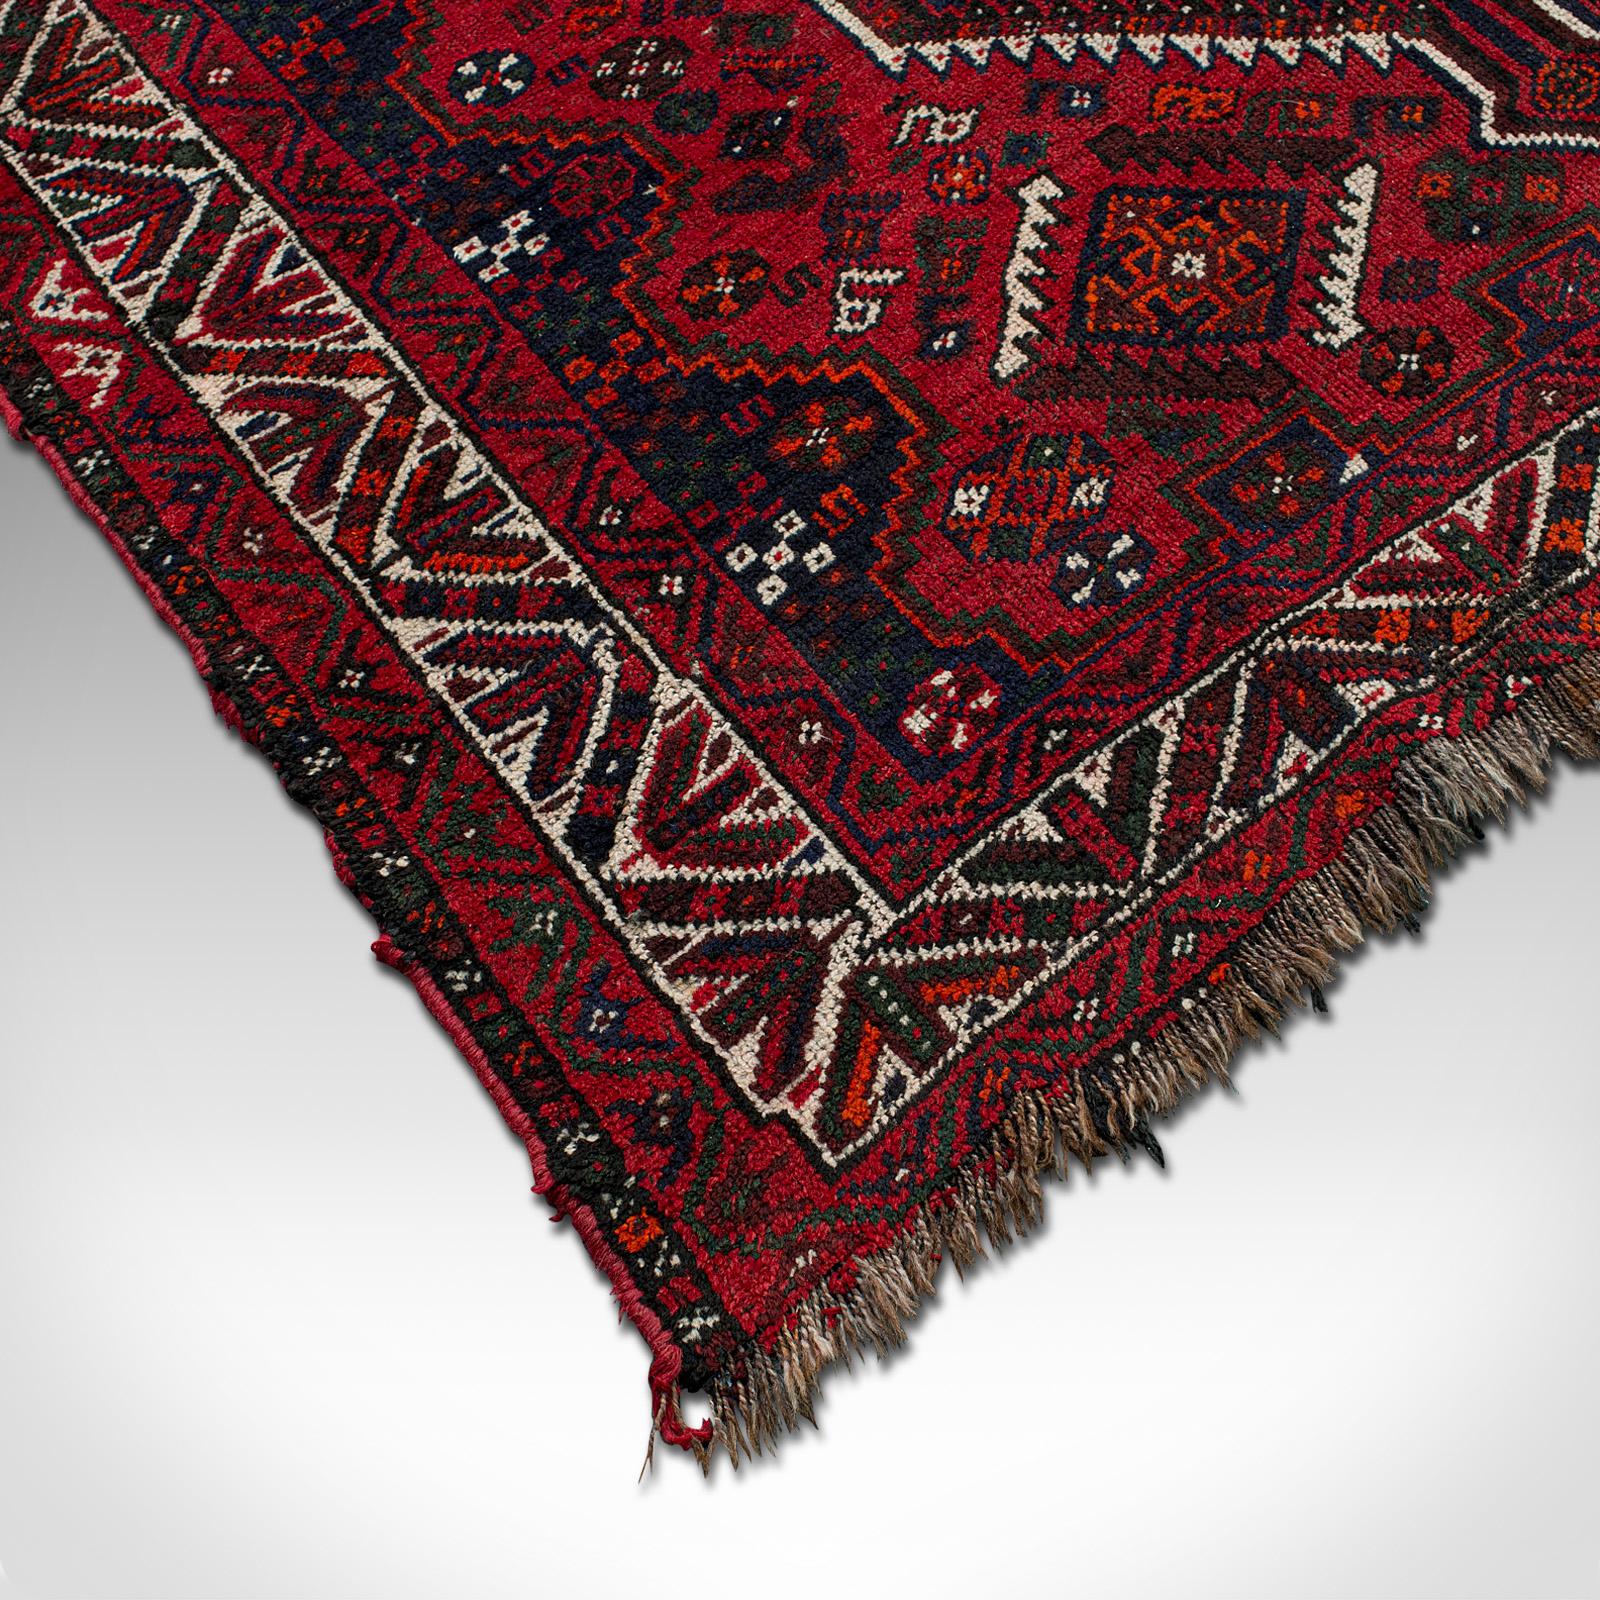 Textile Antique Turkoman Carpet, Caucasian, Hand Woven, Lounge, Hallway, Rug, Circa 1900 For Sale